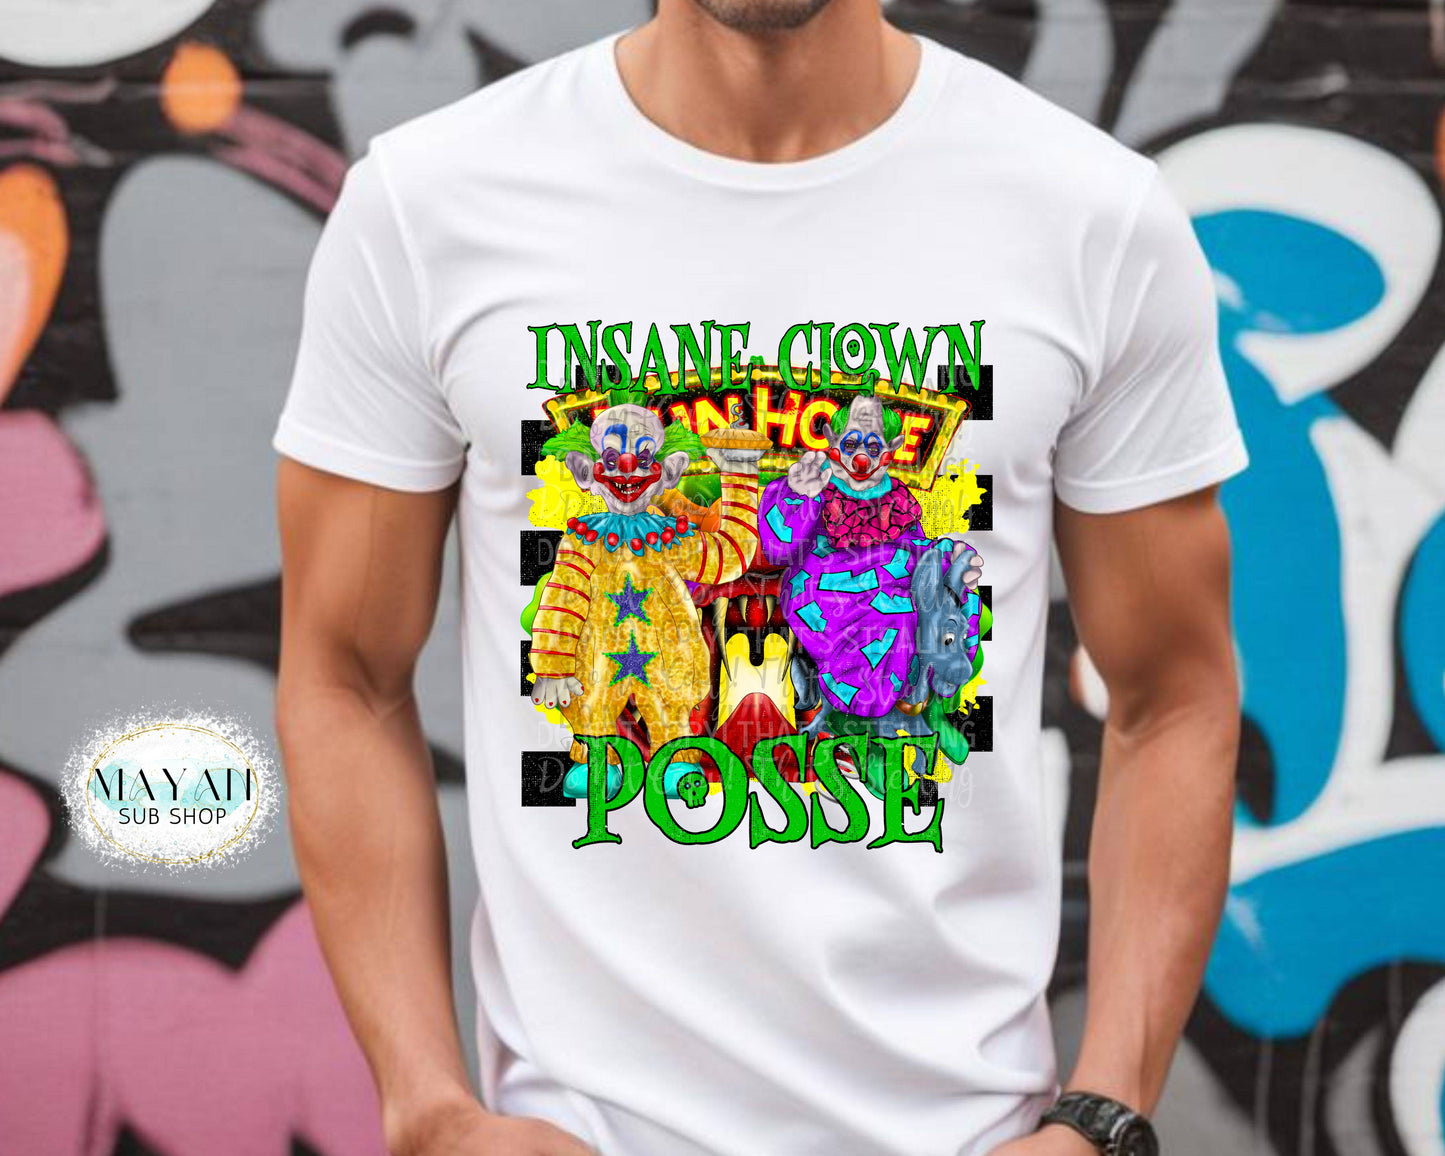 Insane clown posse shirt. -Mayan Sub Shop